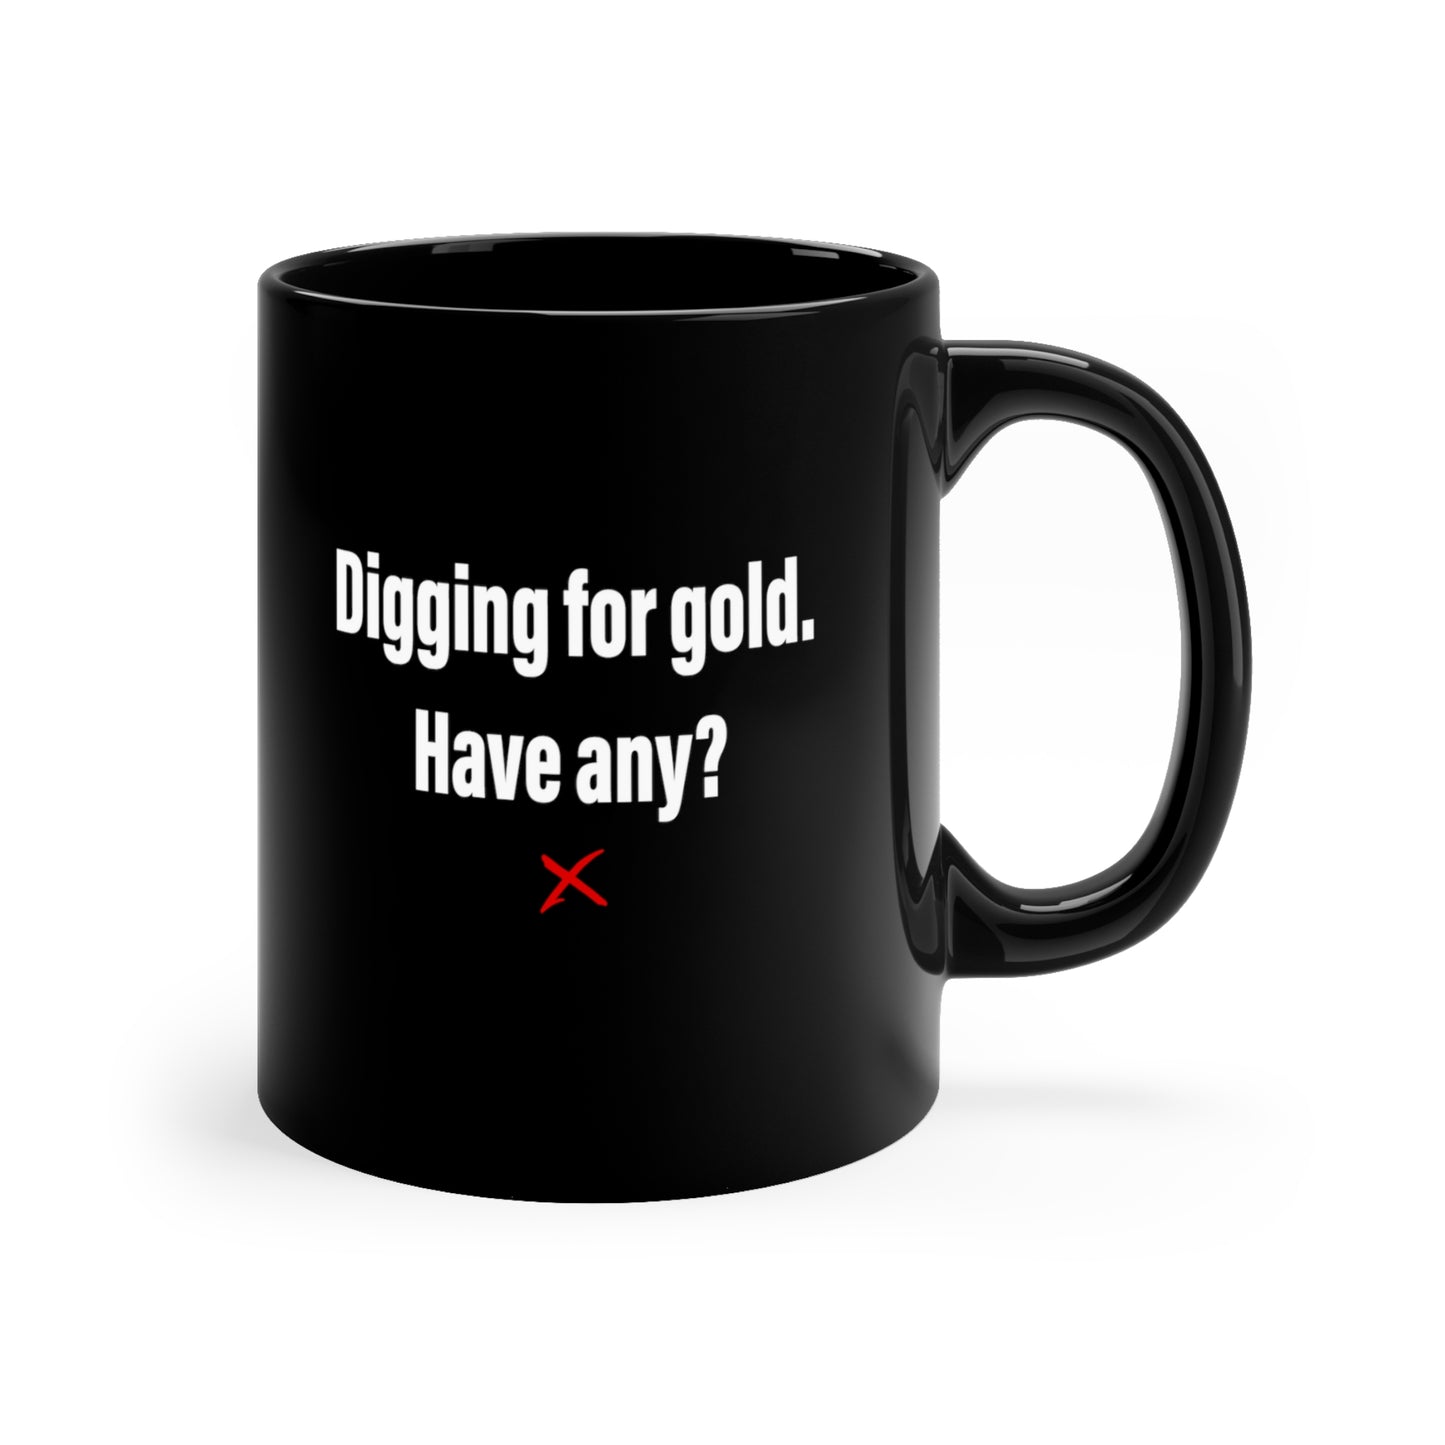 Digging for gold. Have any? - Mug